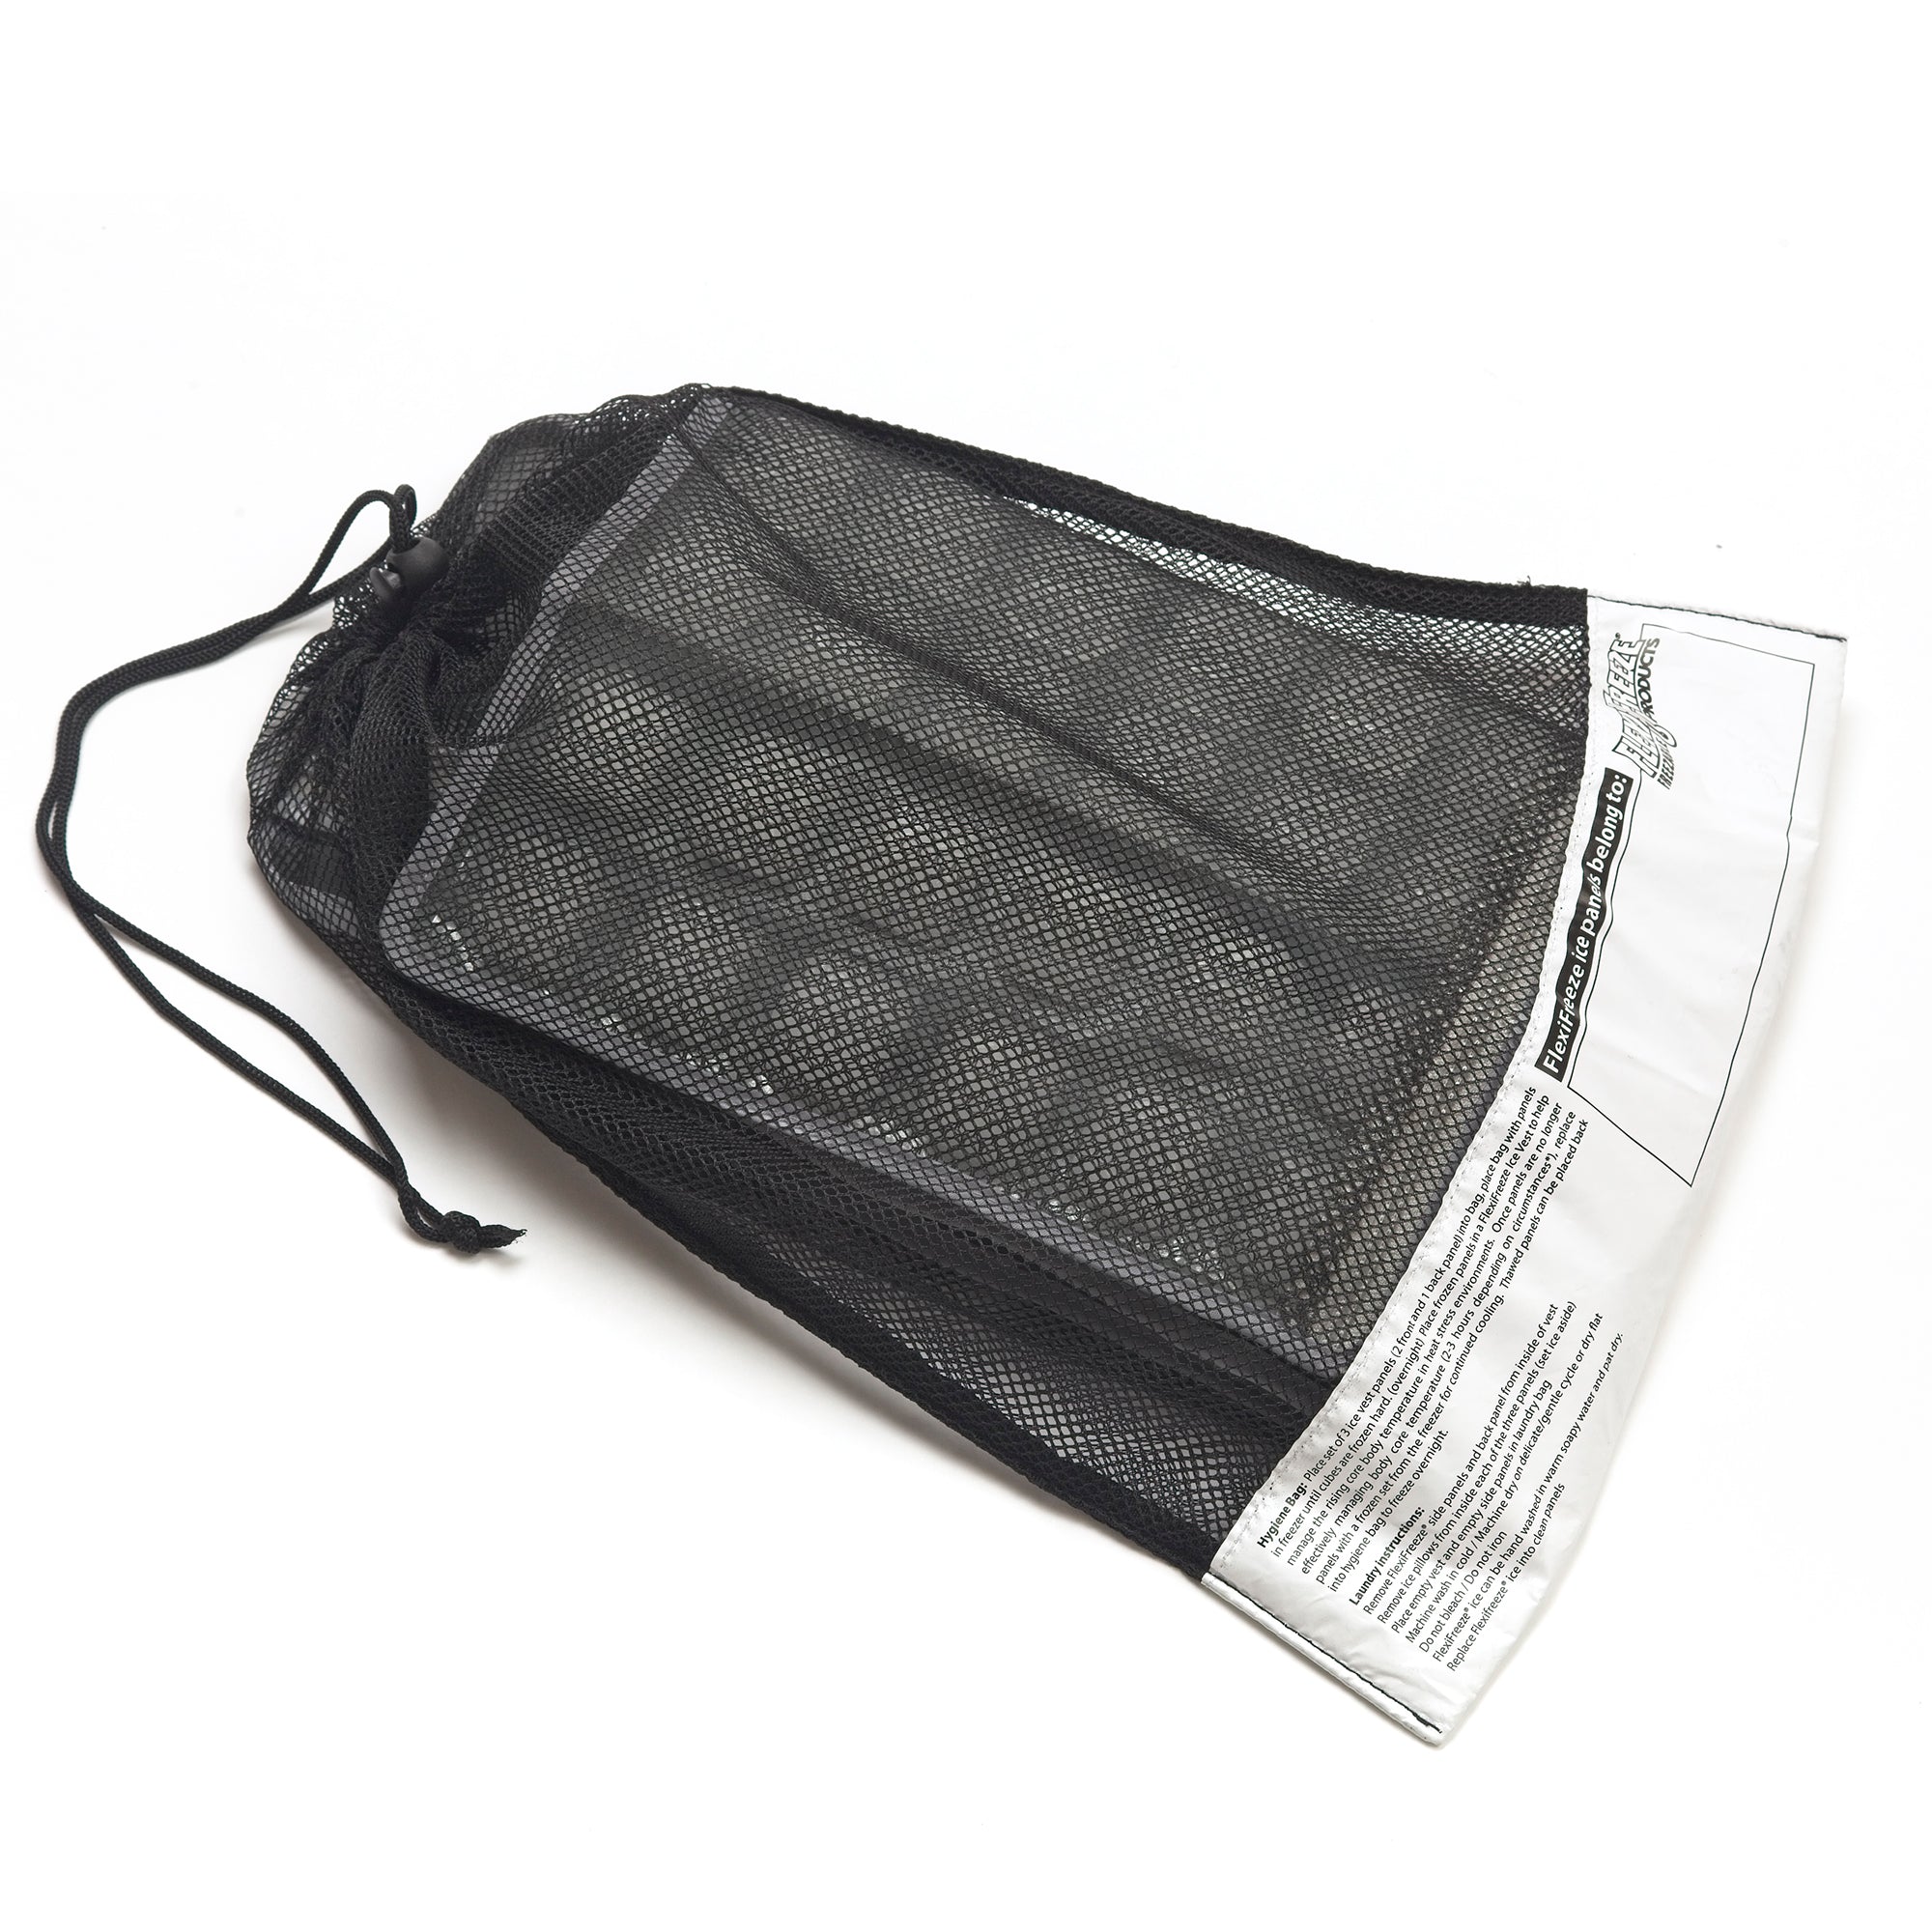 FlexiFreeze refreezable ice panels inside mesh bag for FlexiFreeze professional cooling ice vest, gray